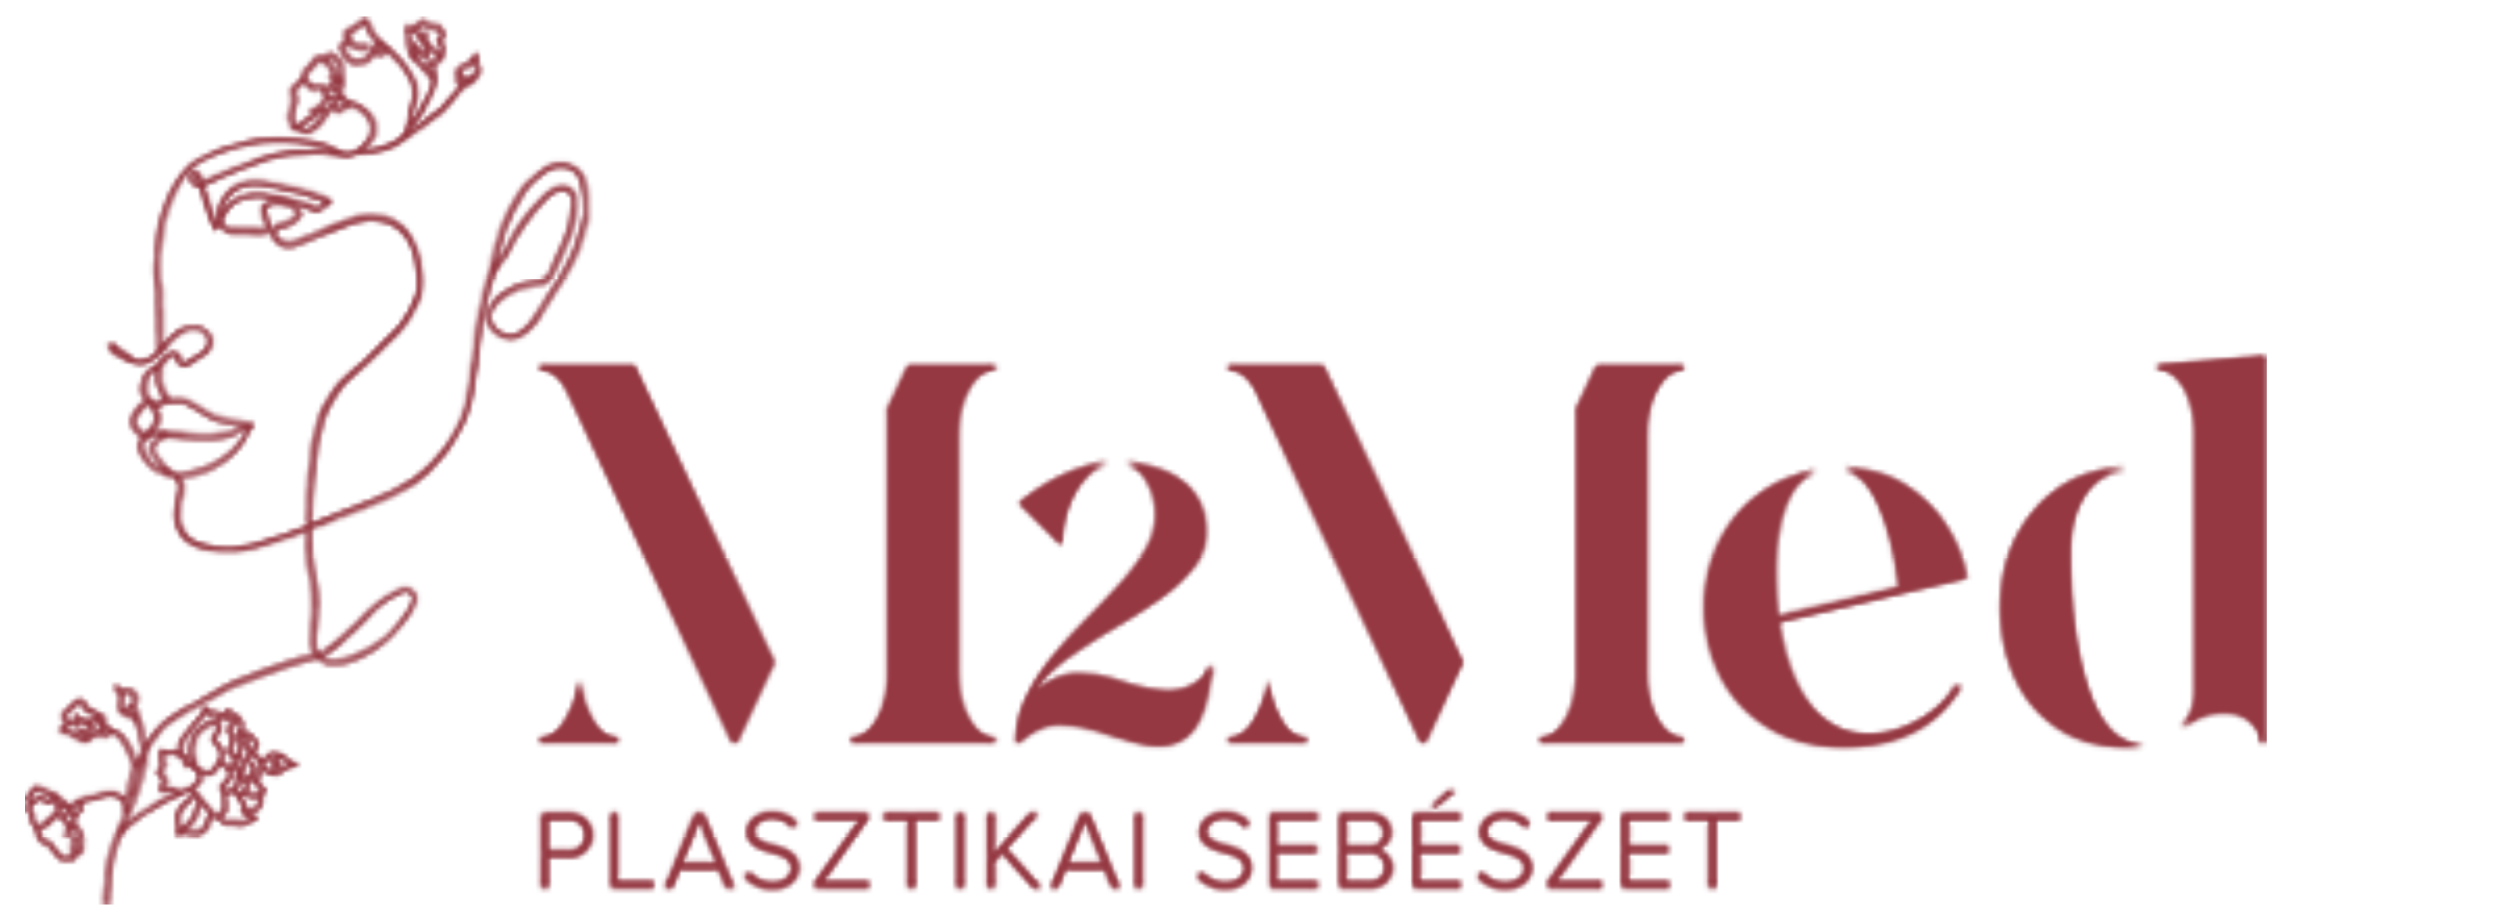 M2Med logo